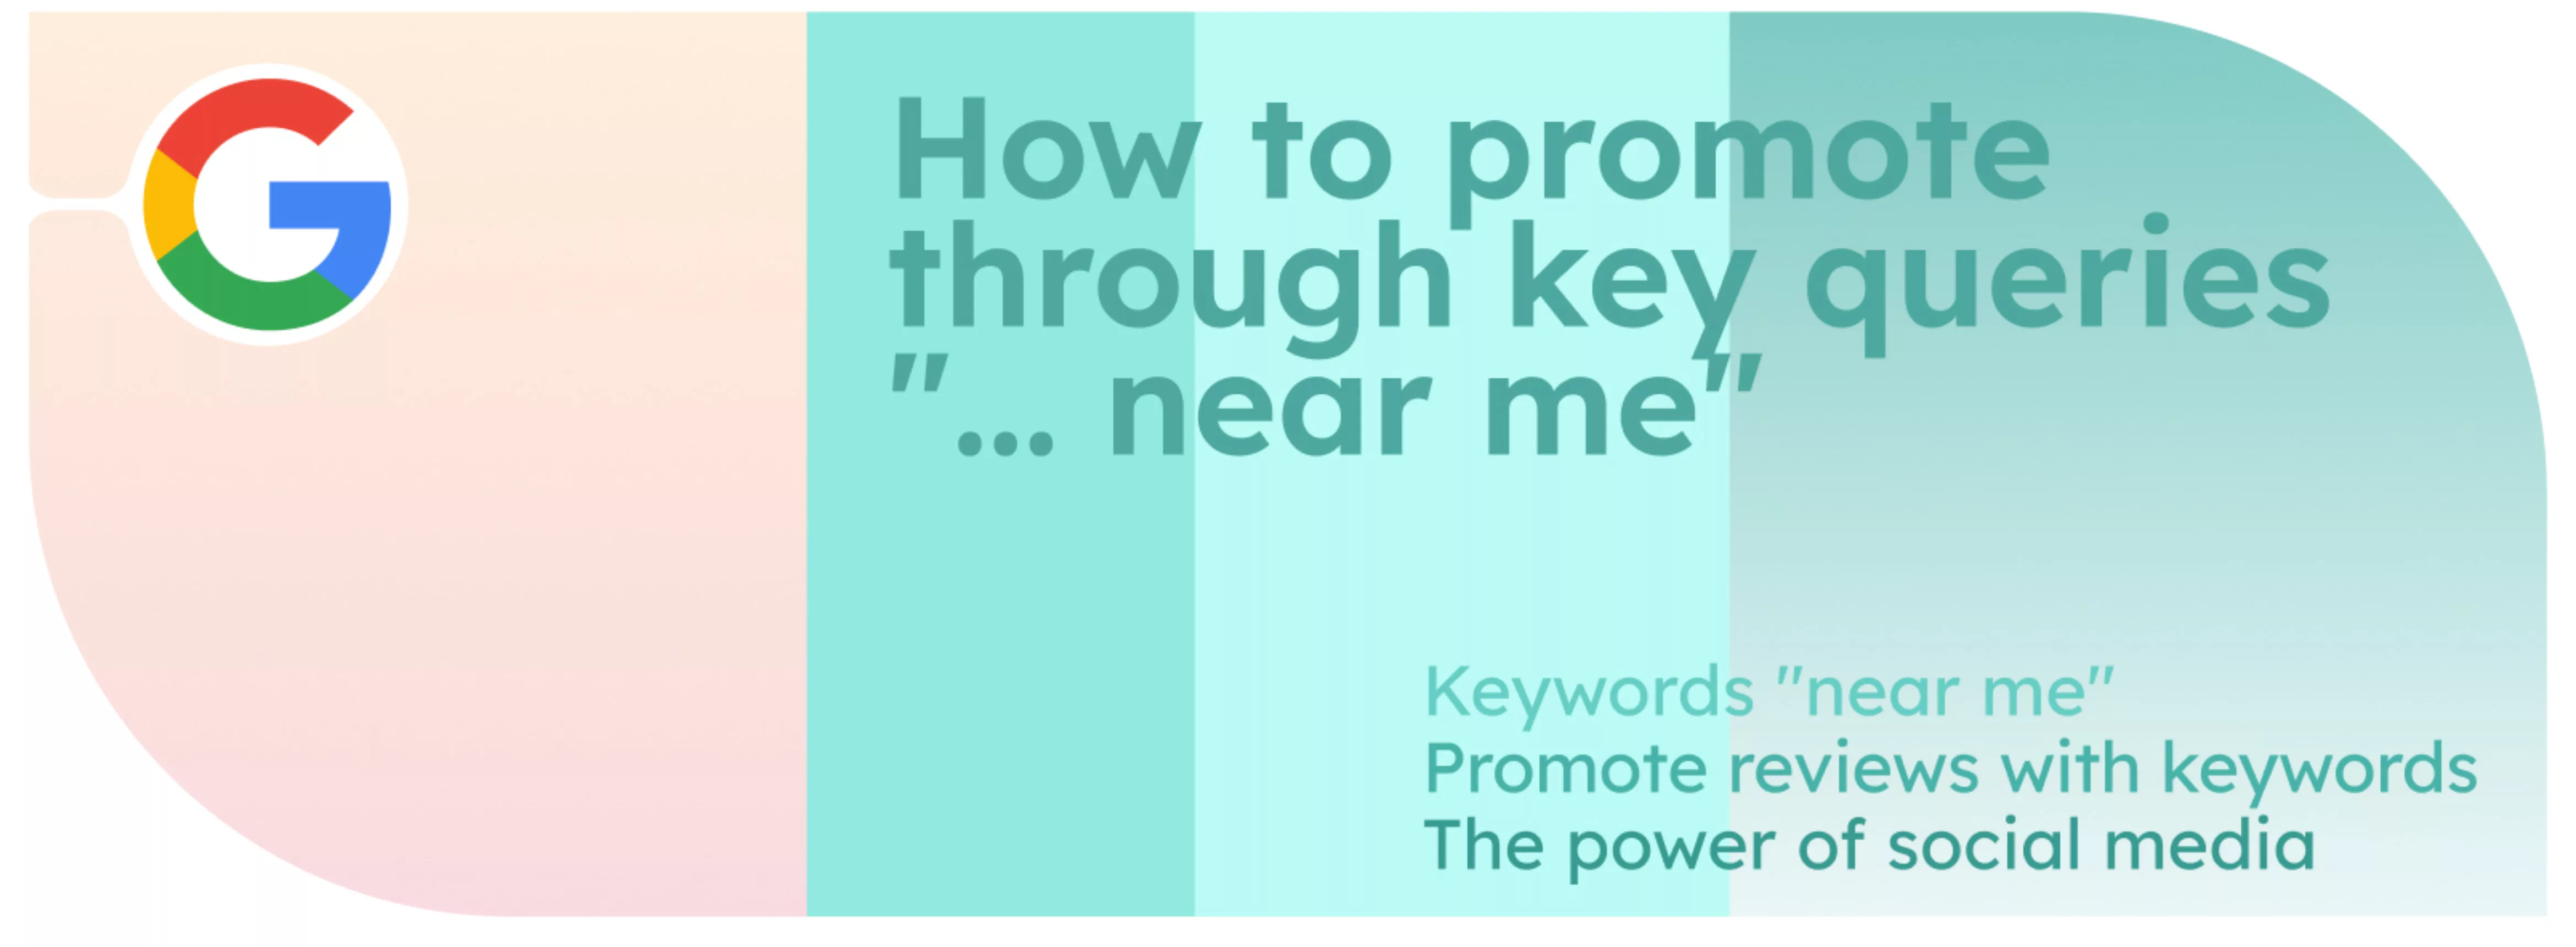 How to promote through key queries “… near me”